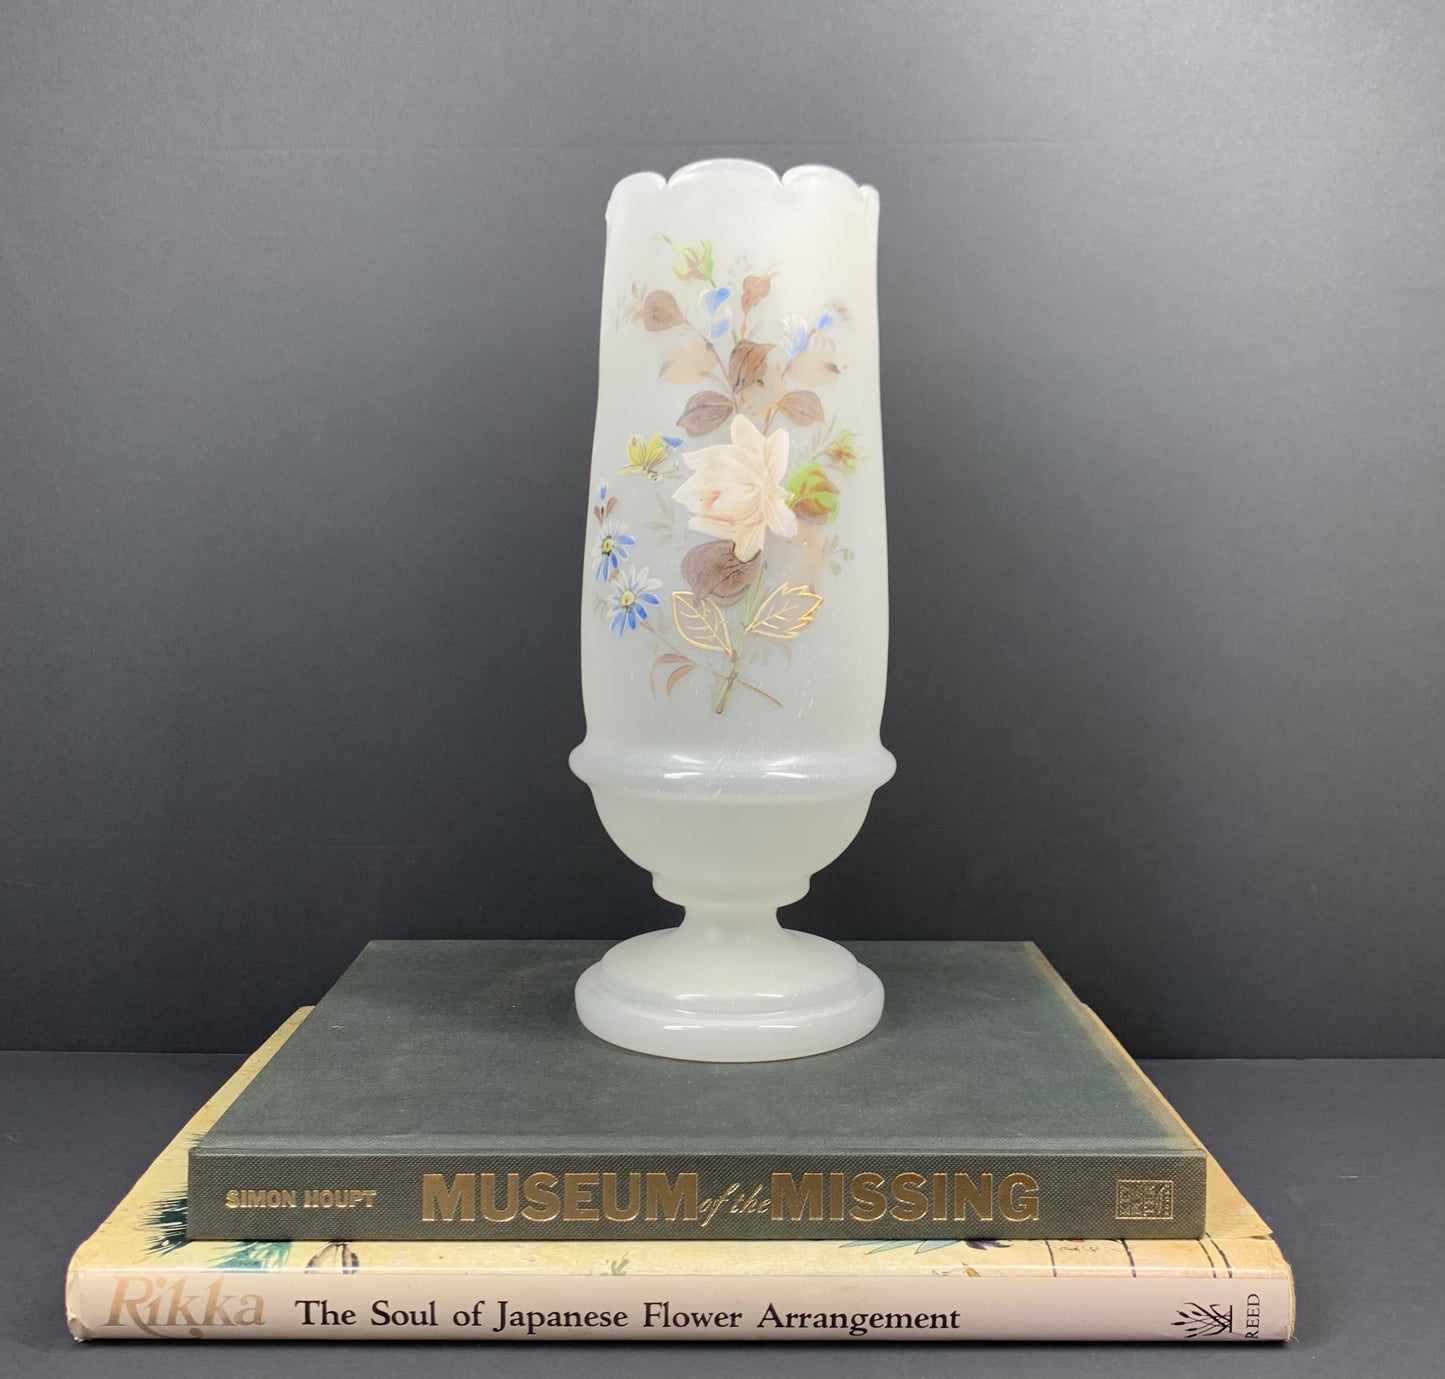 Antique Victorian hand painted floral motif satin glass vase